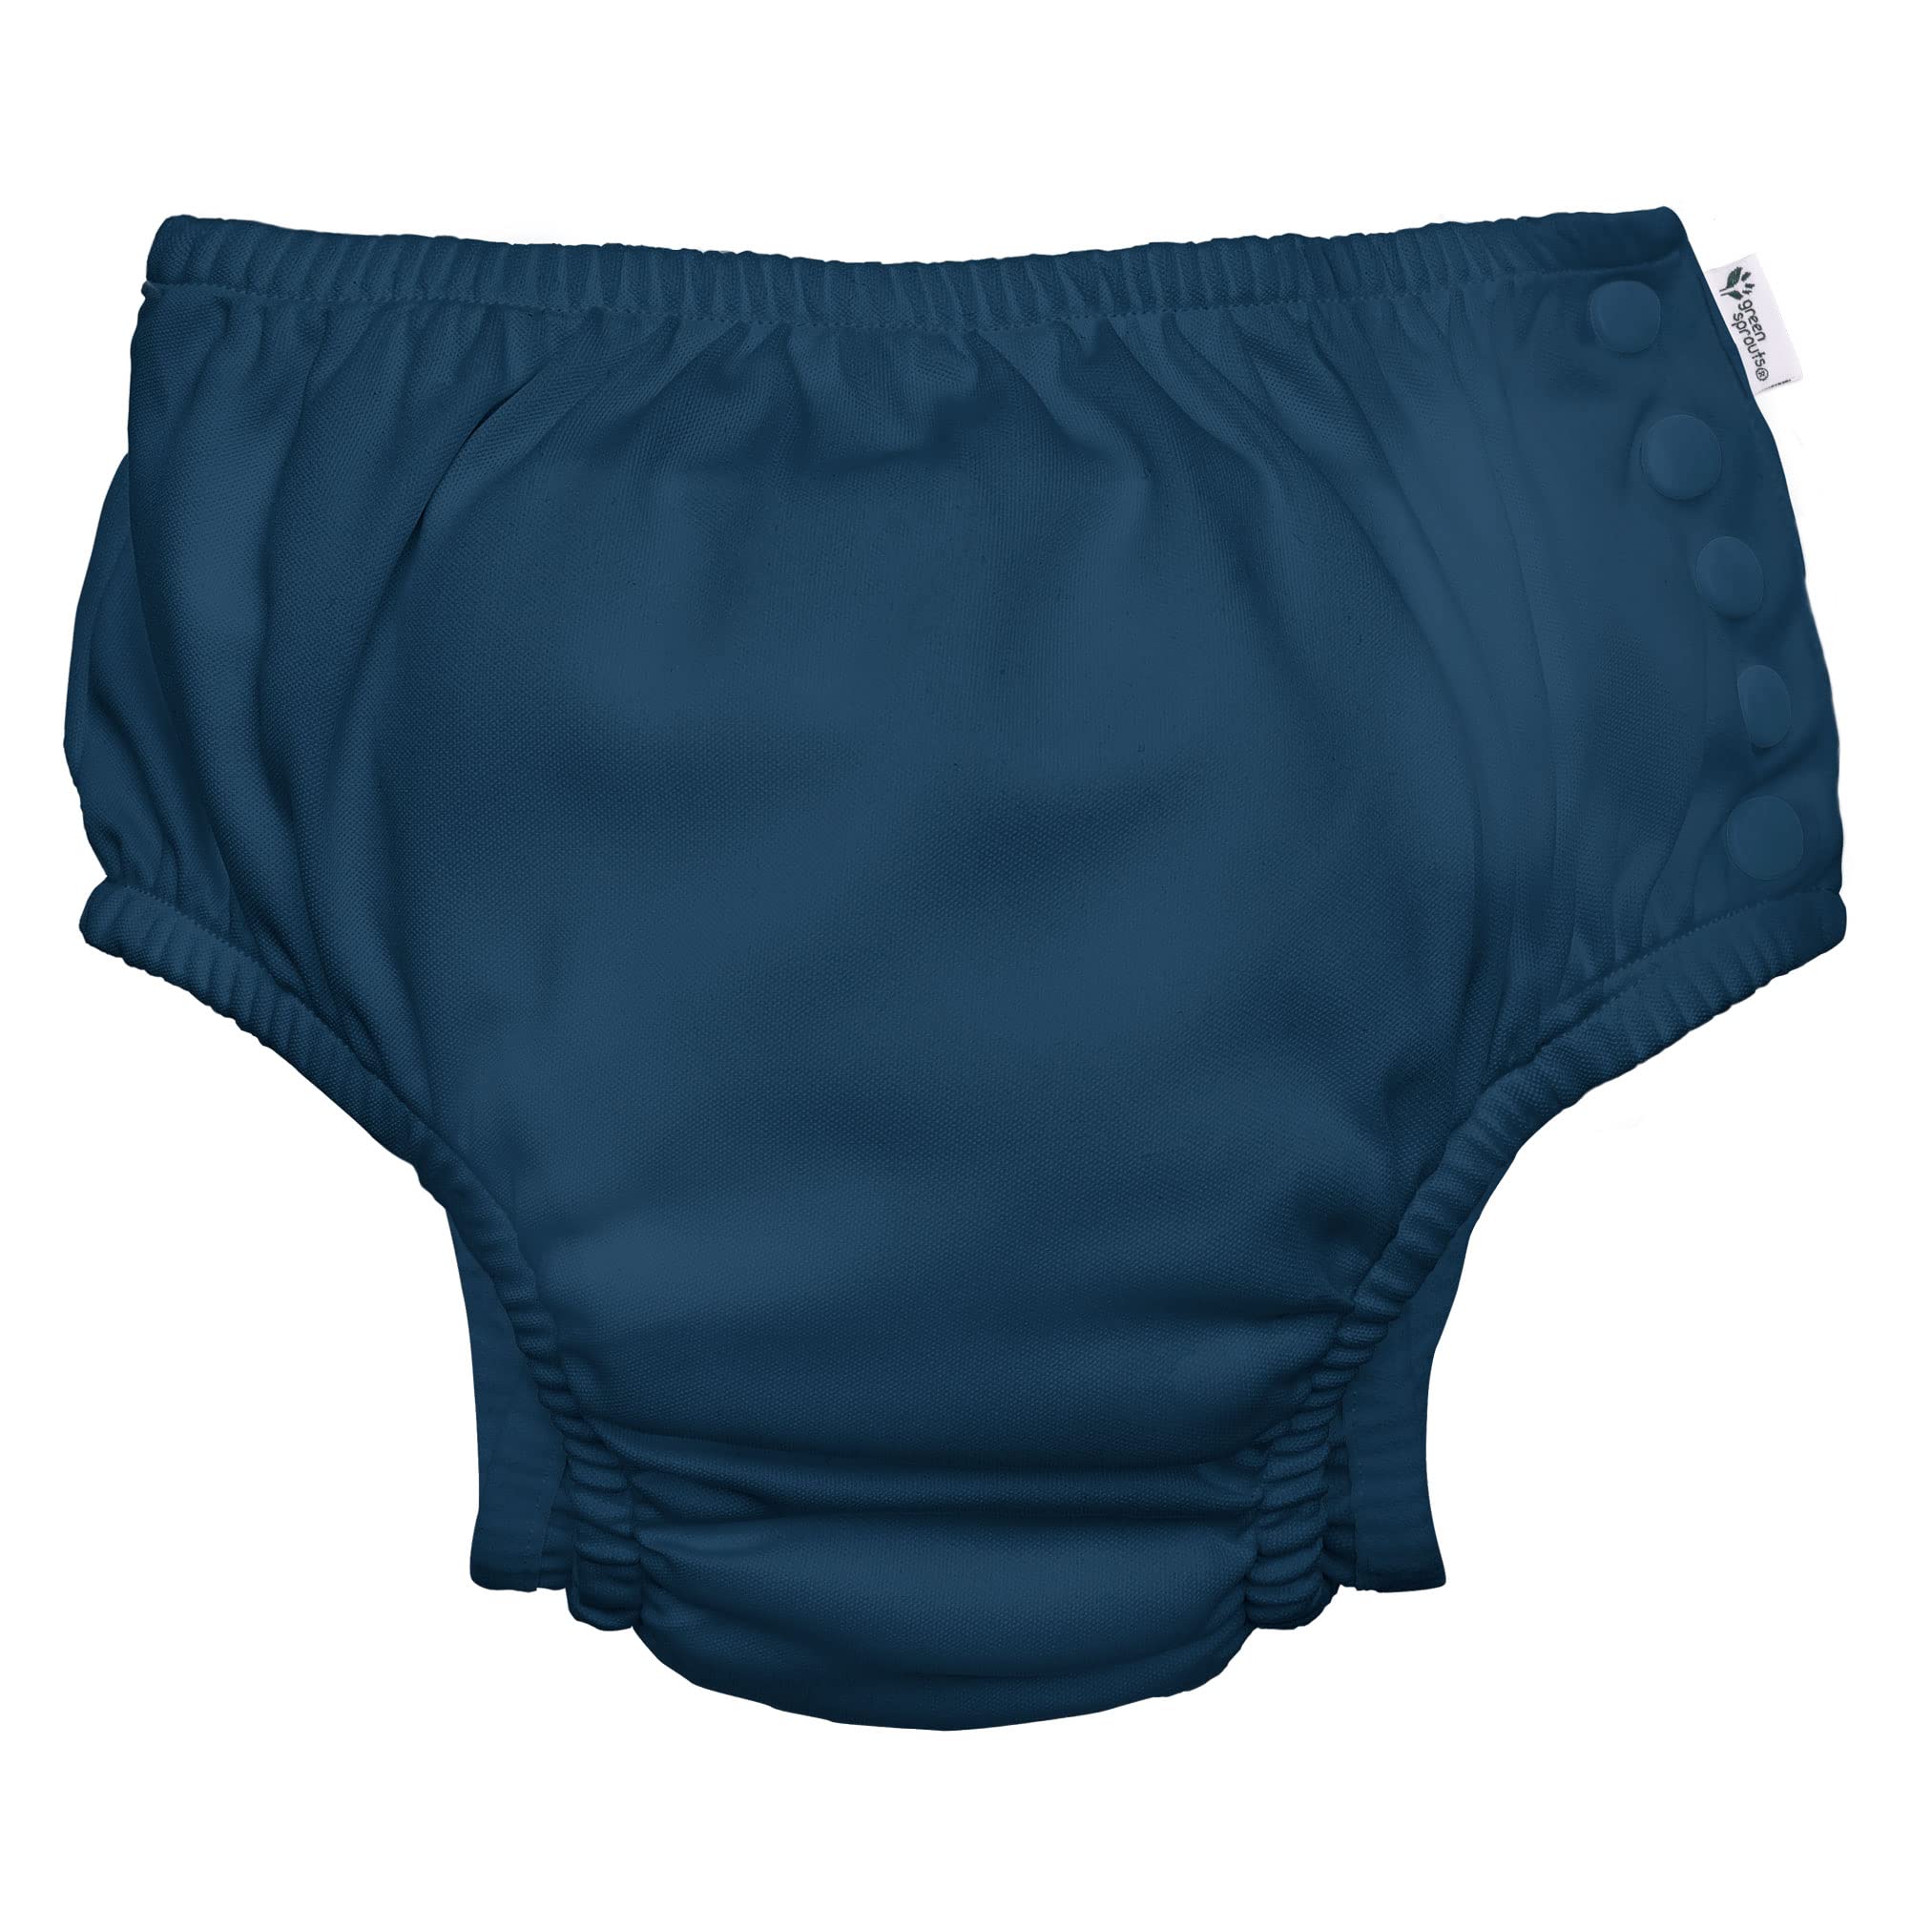 i play. Unisex-Adult Snap Swim Diaper